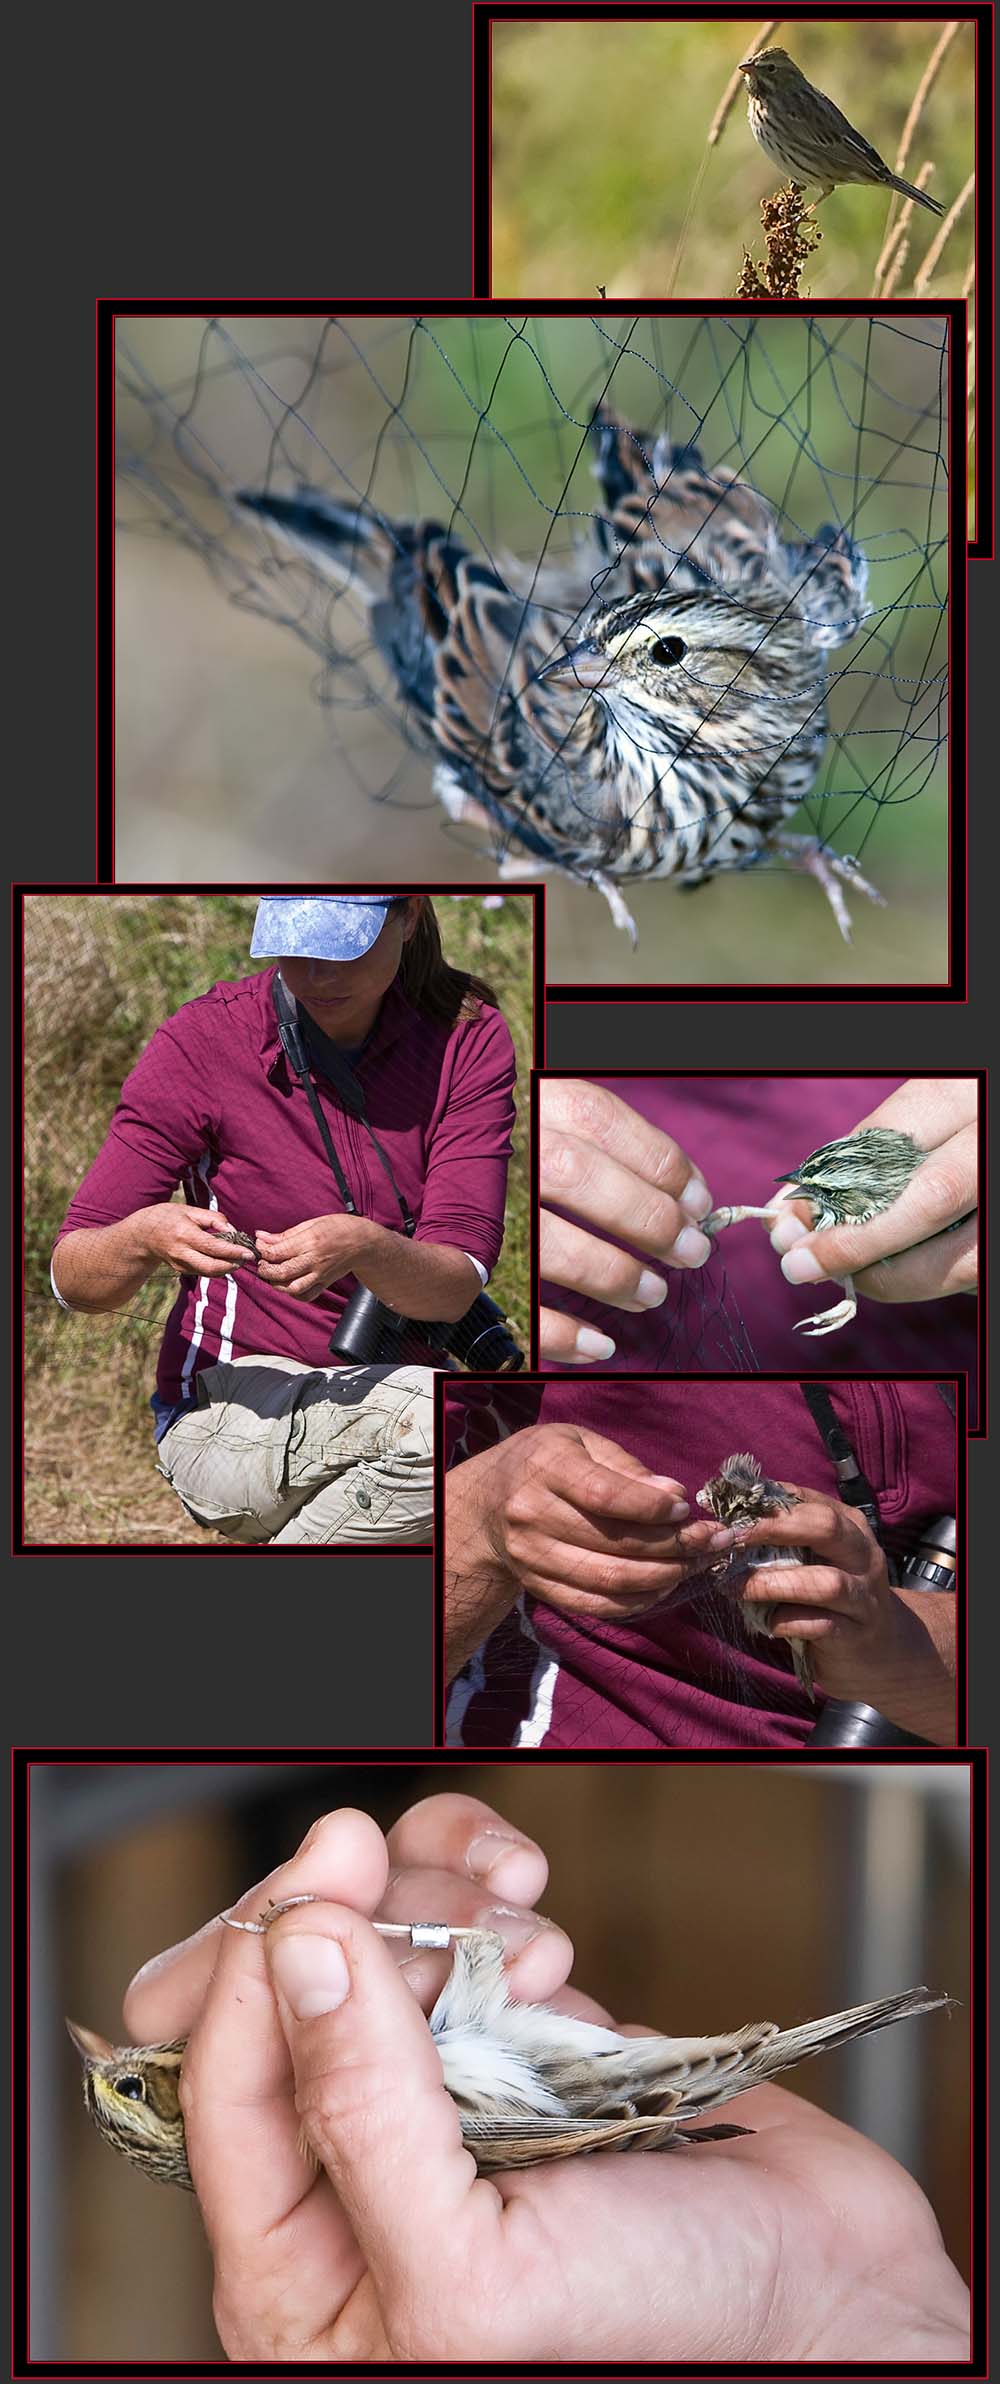 Savannah Sparrow - Petit Manan Island - Maine Coastal Islands National Wildlife Refuge